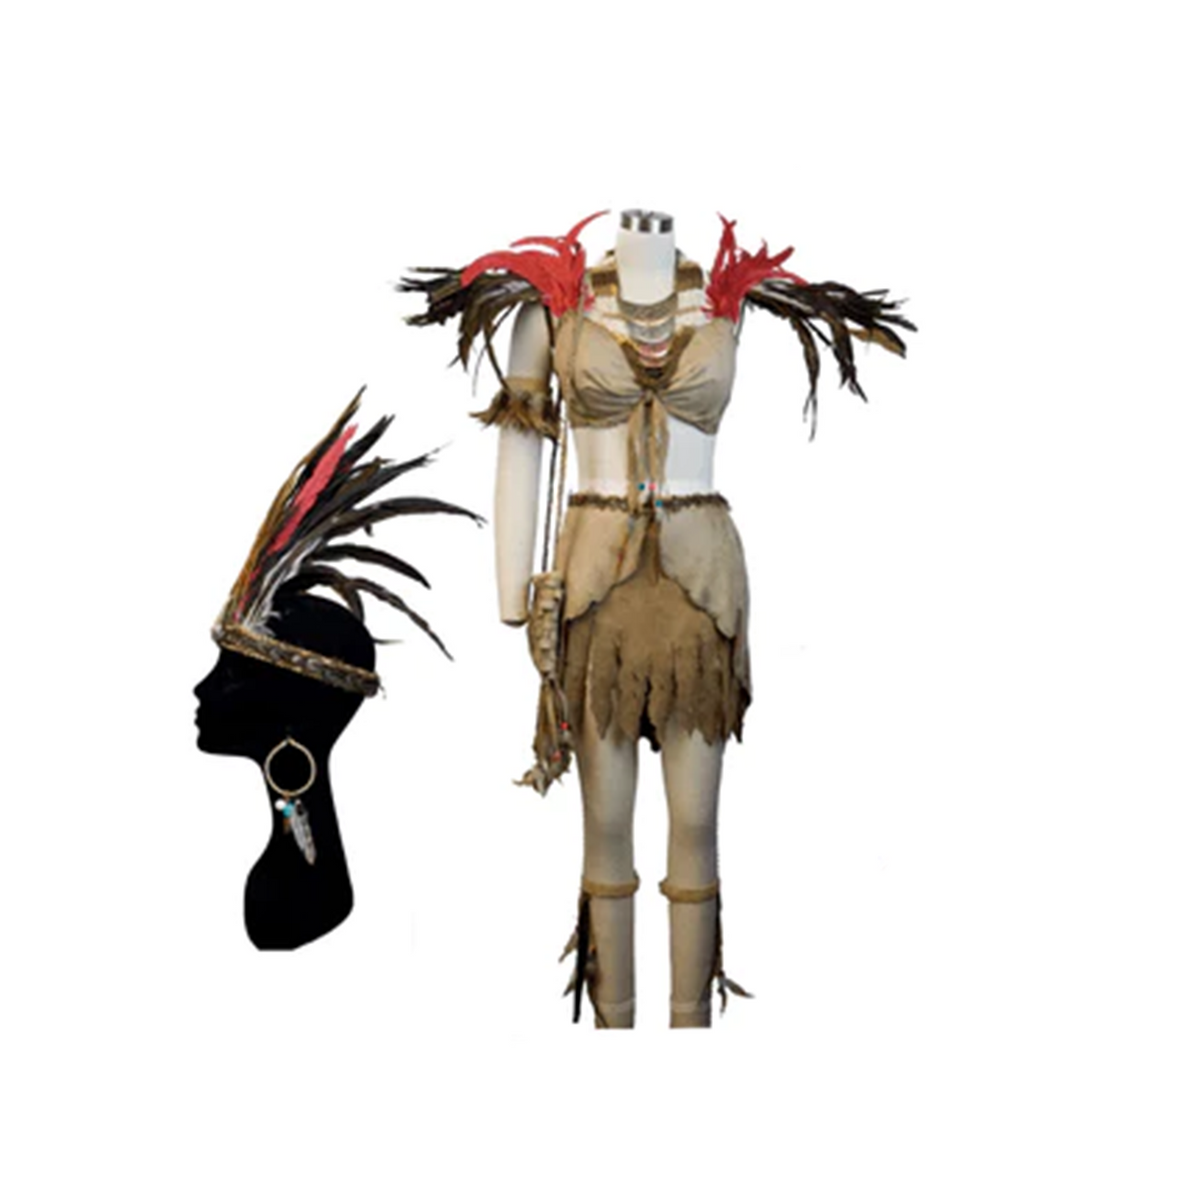 Premiere Handmade Tribal Woman Adult Costume w/ Jewelry and Headdress